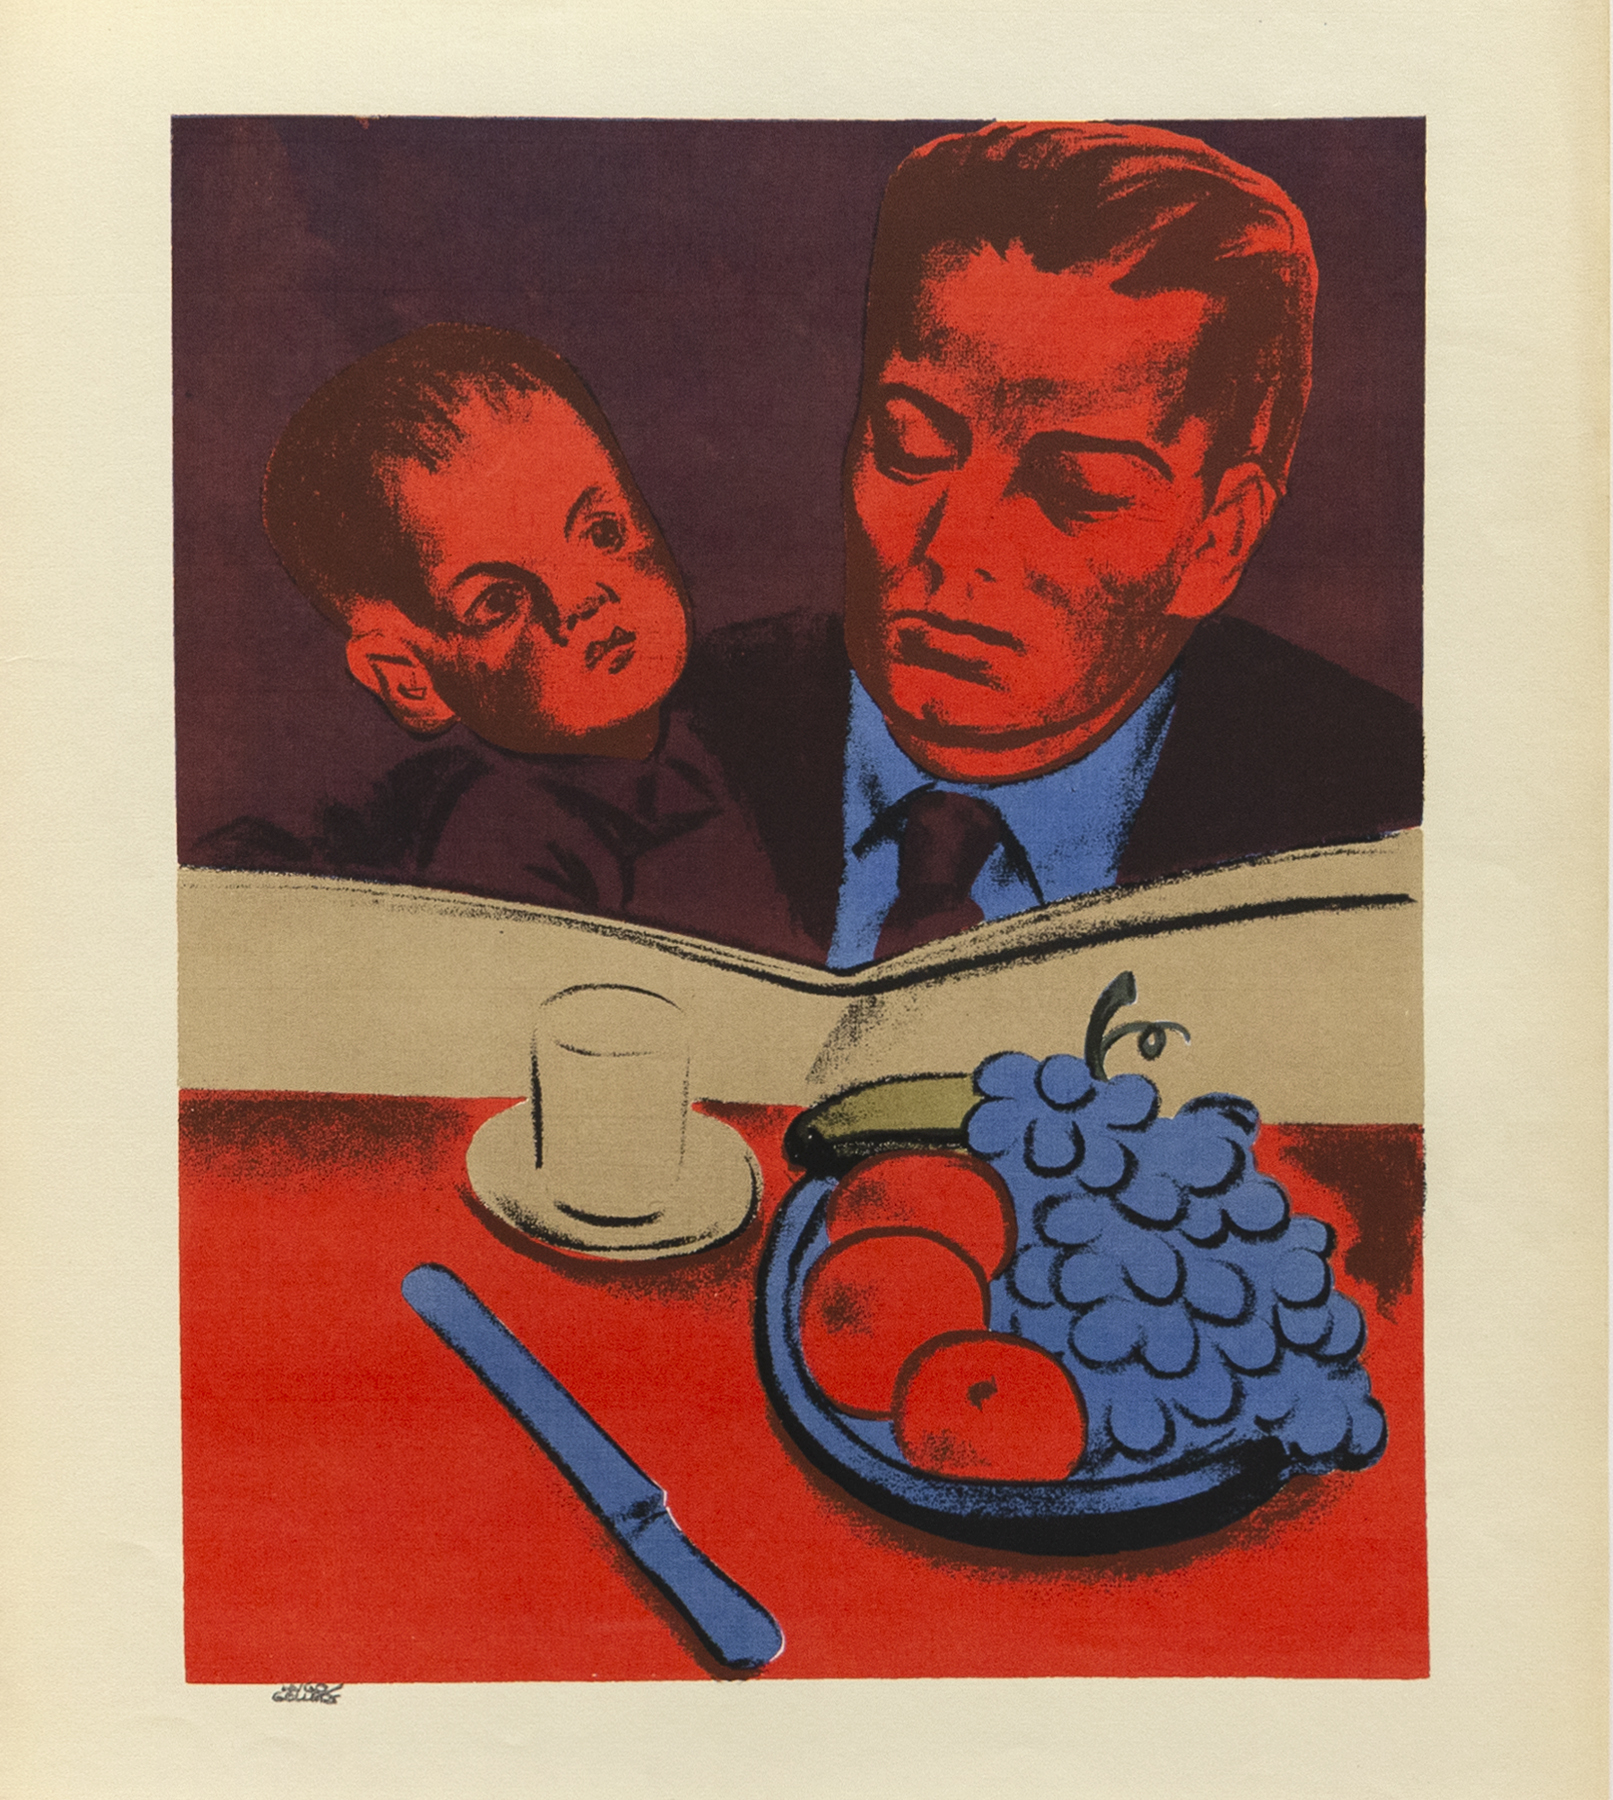 ABC of Democracy, 1943, Silkscreen, 15 x 12 inches (38.1 x 30.5 cm), Edition of 54